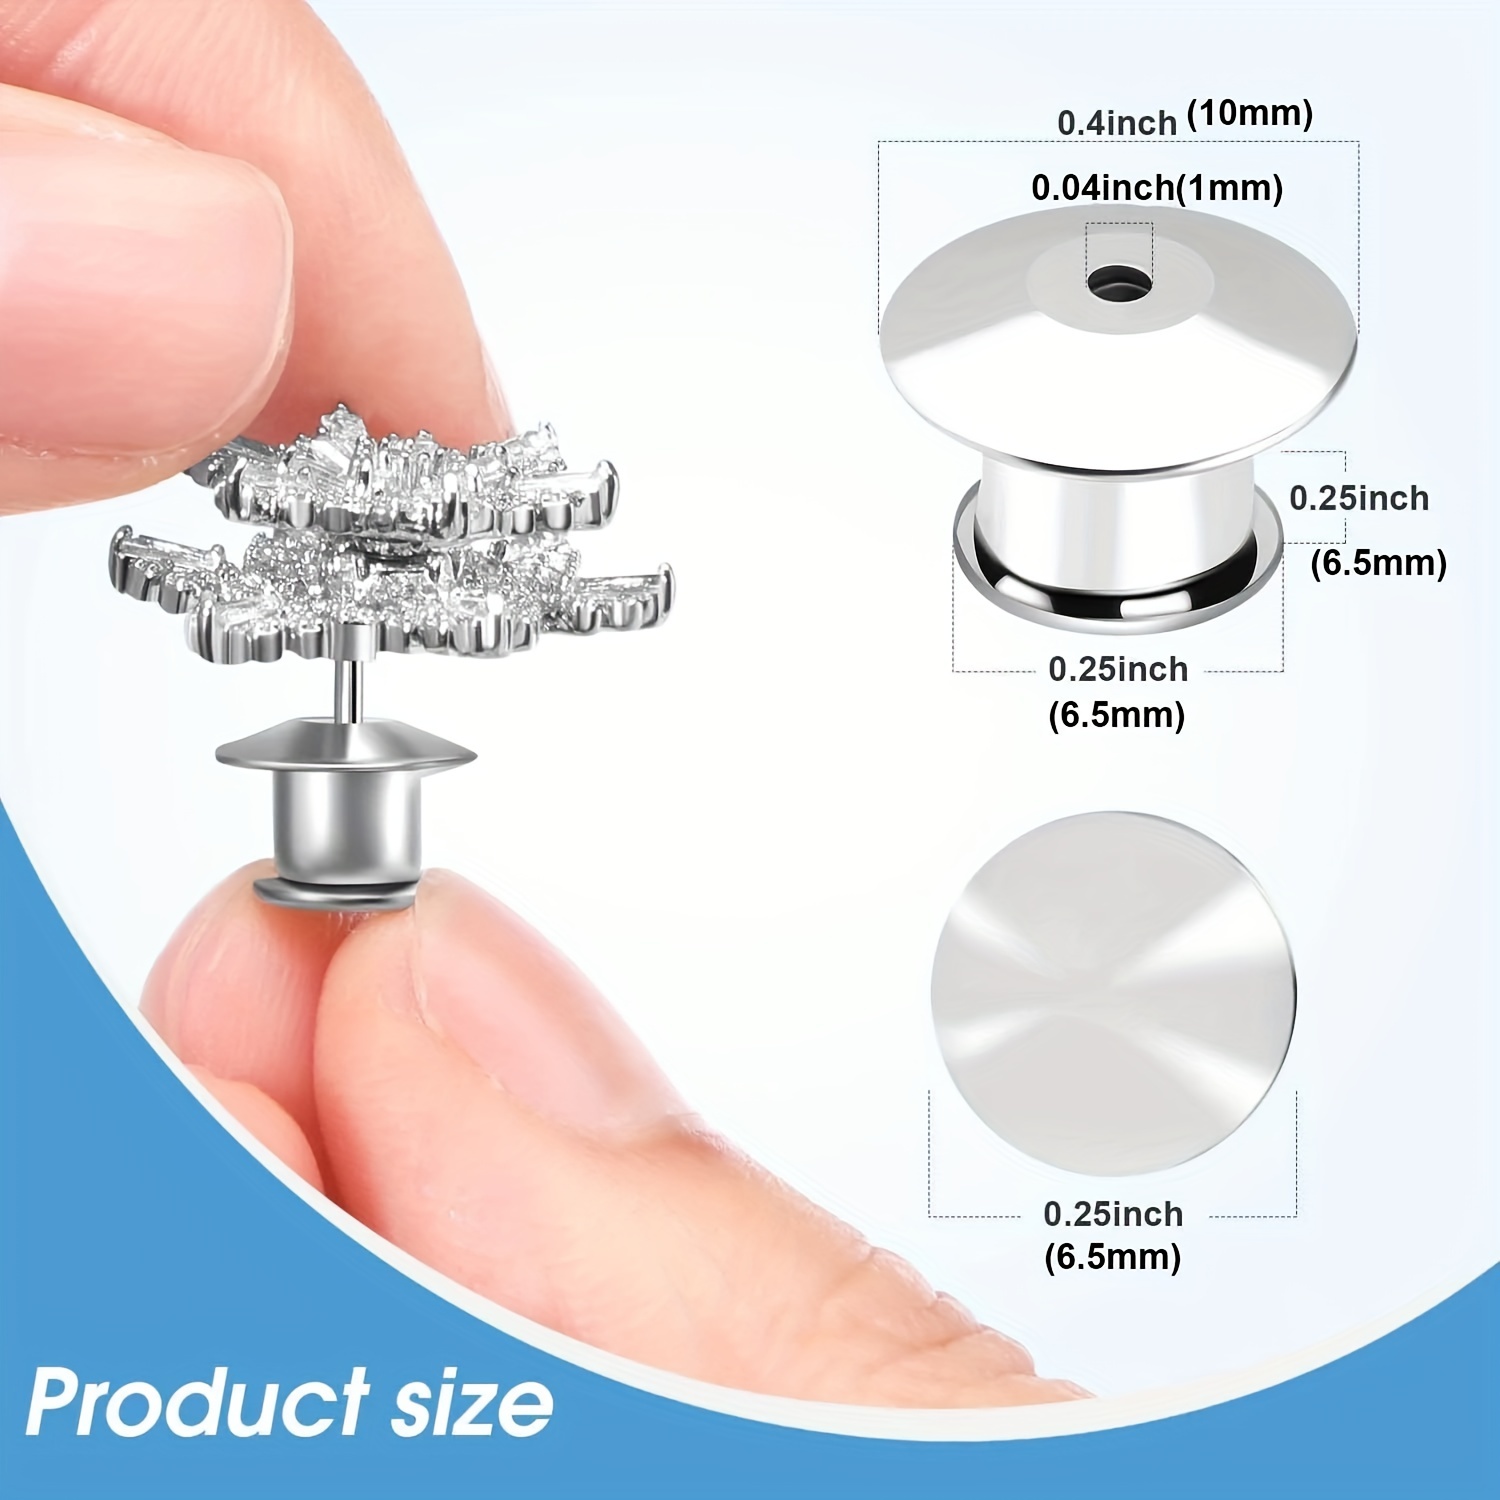 Magnetic Locking Pin Backs Pin Keepers Mount or Wear! (Set of 5